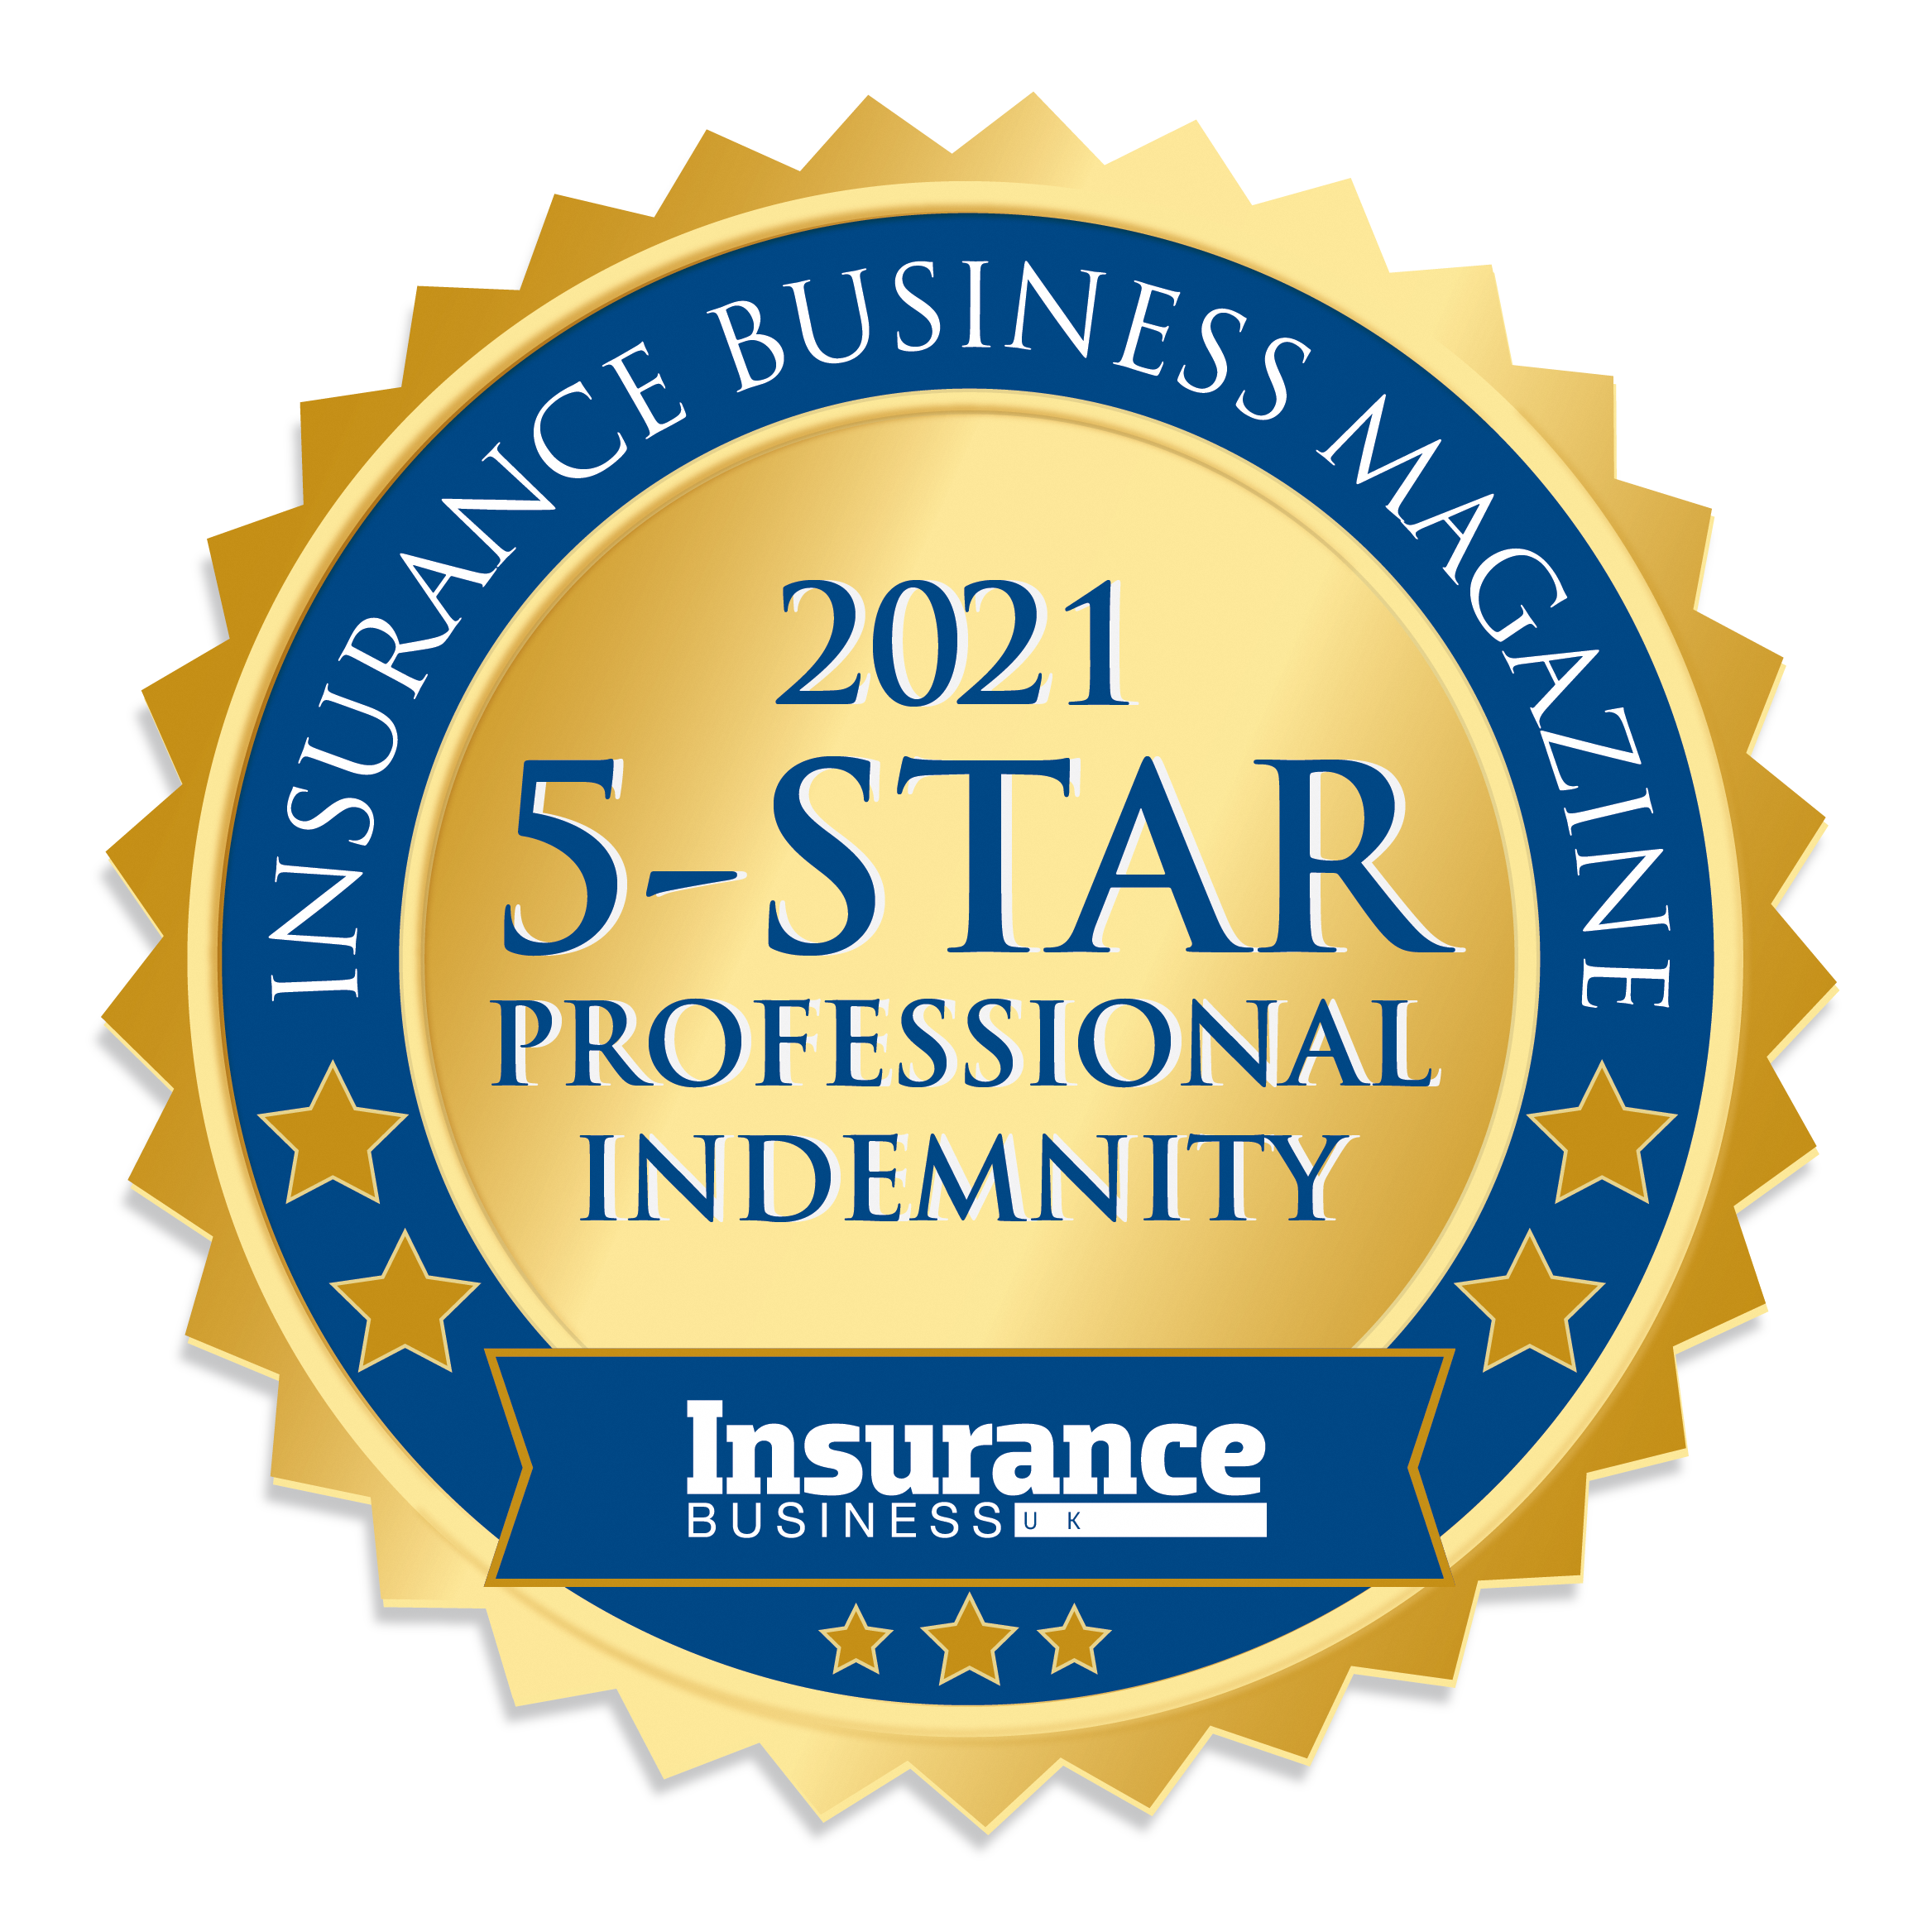 5-Star Professional Indemnity 2021 award